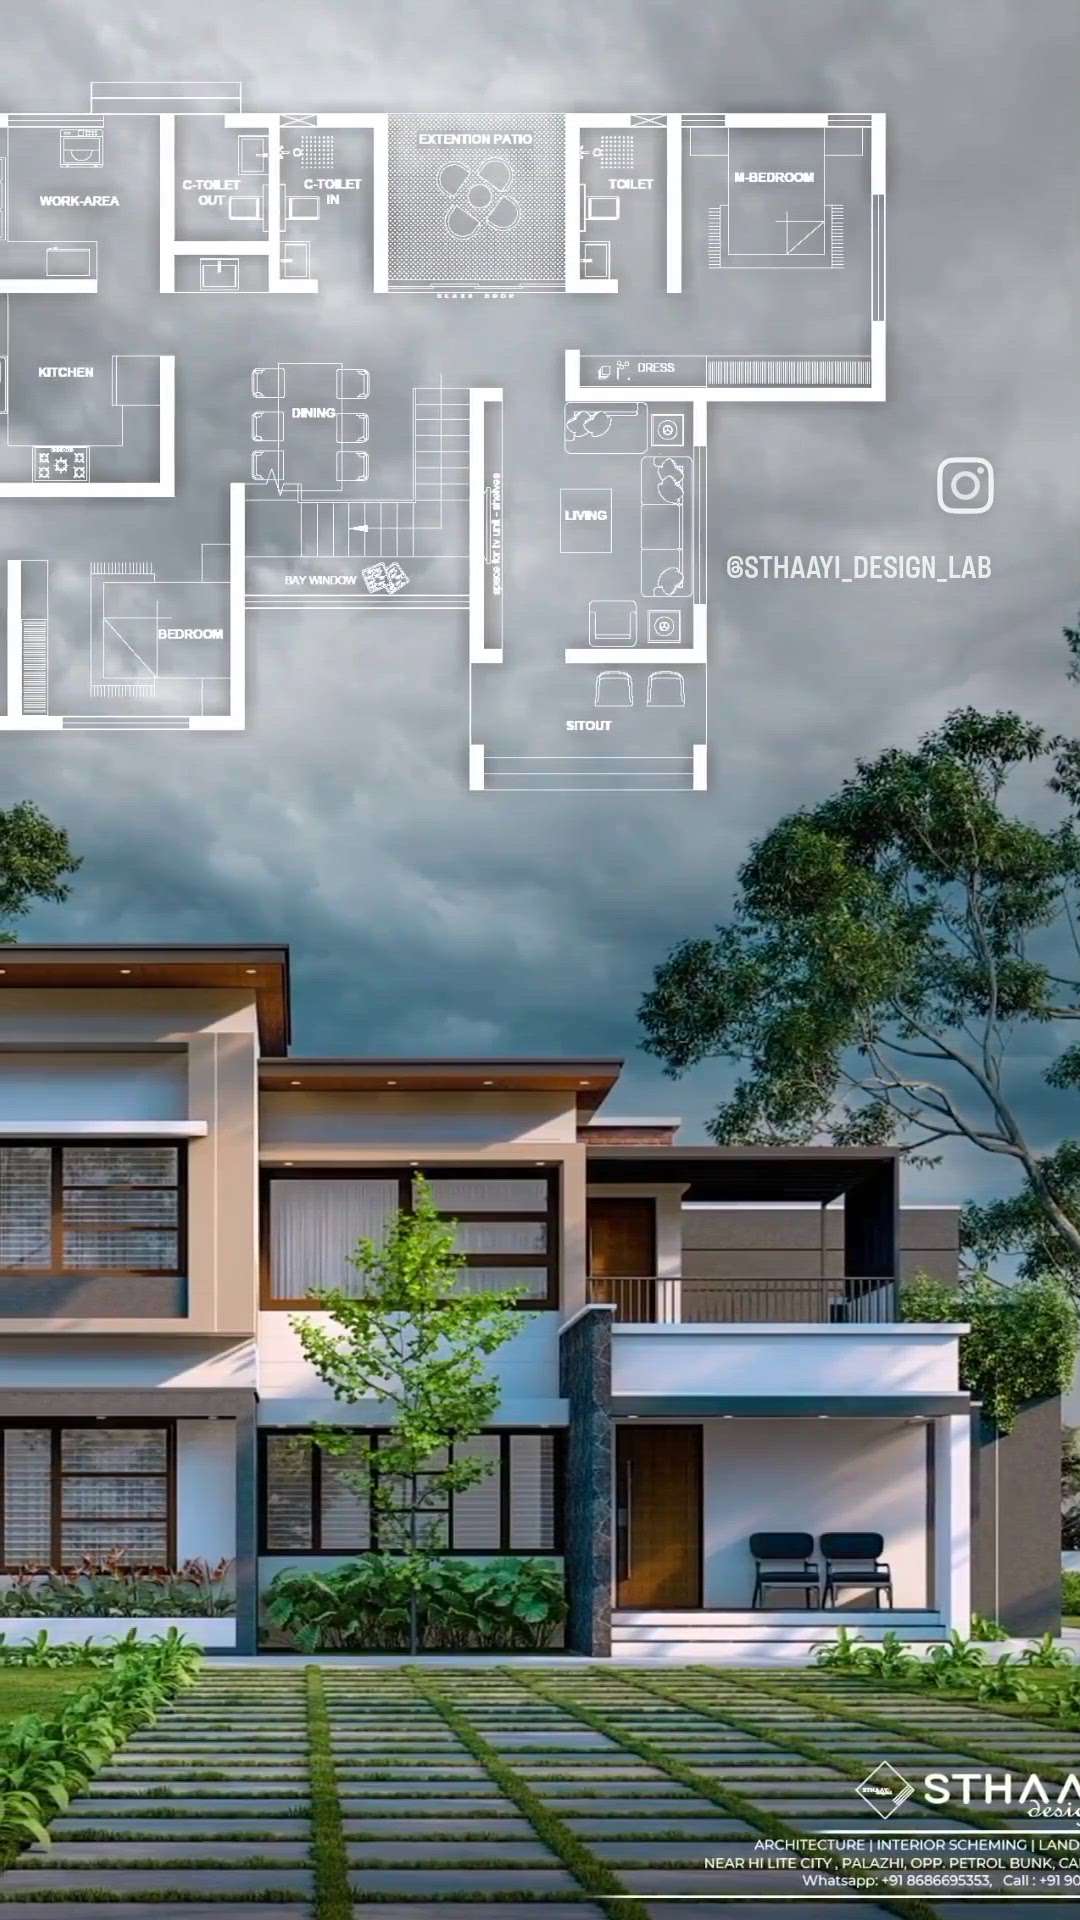 𝟏𝟕𝟎𝟓 sqft Home plan 🏠 Exterior 🏡3BHK 🏕🏠 Details 👇👇
Design: @sthaayi_design_lab
.
"𝗚𝗥𝗢𝗨𝗡𝗗 𝗙𝗟𝗢𝗢𝗥"
𝗦𝗶𝘁𝗼𝘂𝘁
𝗟𝗶𝘃𝗶𝗻𝗴
𝟮𝗕𝗲𝗱𝗿𝗼𝗼𝗺 𝟮𝗮𝘁𝘁𝗮𝗰𝗵𝗲𝗱 𝟮𝗗𝗿𝗲𝘀𝘀𝗶𝗻𝗴 
𝗗𝗶𝗻𝗶𝗻𝗴
𝟭 𝗕𝗮𝘆 𝘄𝗶𝗻𝗱𝗼𝘄
𝟭 𝗽𝗮𝘁𝗶𝗼
𝟭 𝗖-𝗧𝗼𝗶𝗹𝗲𝘁 𝗜𝗡
𝟭 𝗖-𝗧𝗼𝗶𝗹𝗲𝘁 𝗢𝗨𝗧
𝗞𝗶𝘁𝗰𝗵𝗲𝗻 
𝗪𝗼𝗿𝗸-𝗔𝗿𝗲𝗮
.
"𝗙𝗜𝗥𝗦𝗧 𝗙𝗟𝗢𝗢𝗥"
𝗛𝗮𝗹𝗹
𝟭 𝗕𝗲𝗱𝗿𝗼𝗼𝗺 𝟭𝗮𝘁𝘁𝗮𝗰𝗵𝗲𝗱 𝟭𝗗𝗿𝗲𝘀𝘀𝗶𝗻𝗴 𝟭𝗕𝗮𝘆 𝘄𝗶𝗻𝗱𝗼𝘄
𝗕𝗮𝗹𝗰𝗼𝗻𝘆 
𝟭 𝗕𝗮𝘆 𝘄𝗶𝗻𝗱𝗼𝘄
𝟮 𝗢𝗽𝗲𝗻 𝘁𝗲𝗿𝗿𝗮𝗰𝗲

Get more Follow 👉 @sthaayi_design_lab 
.
.
.
.
.
.

#khd #keralahomedesigns
#keralahomedesign #architecturekerala #keralaarchitecture #renovation #keralahomes #interior #interiorkerala #homedecor #landscapekerala #archdaily #homedesigns #elevation #homedesign #kerala #keralahome #thiruvanathpuram #kochi #interior #homedesign #arch #designkerala #archlife #godsowncountry #interiordesign #architect #builder #budgethome #homedecor #elevation #plan